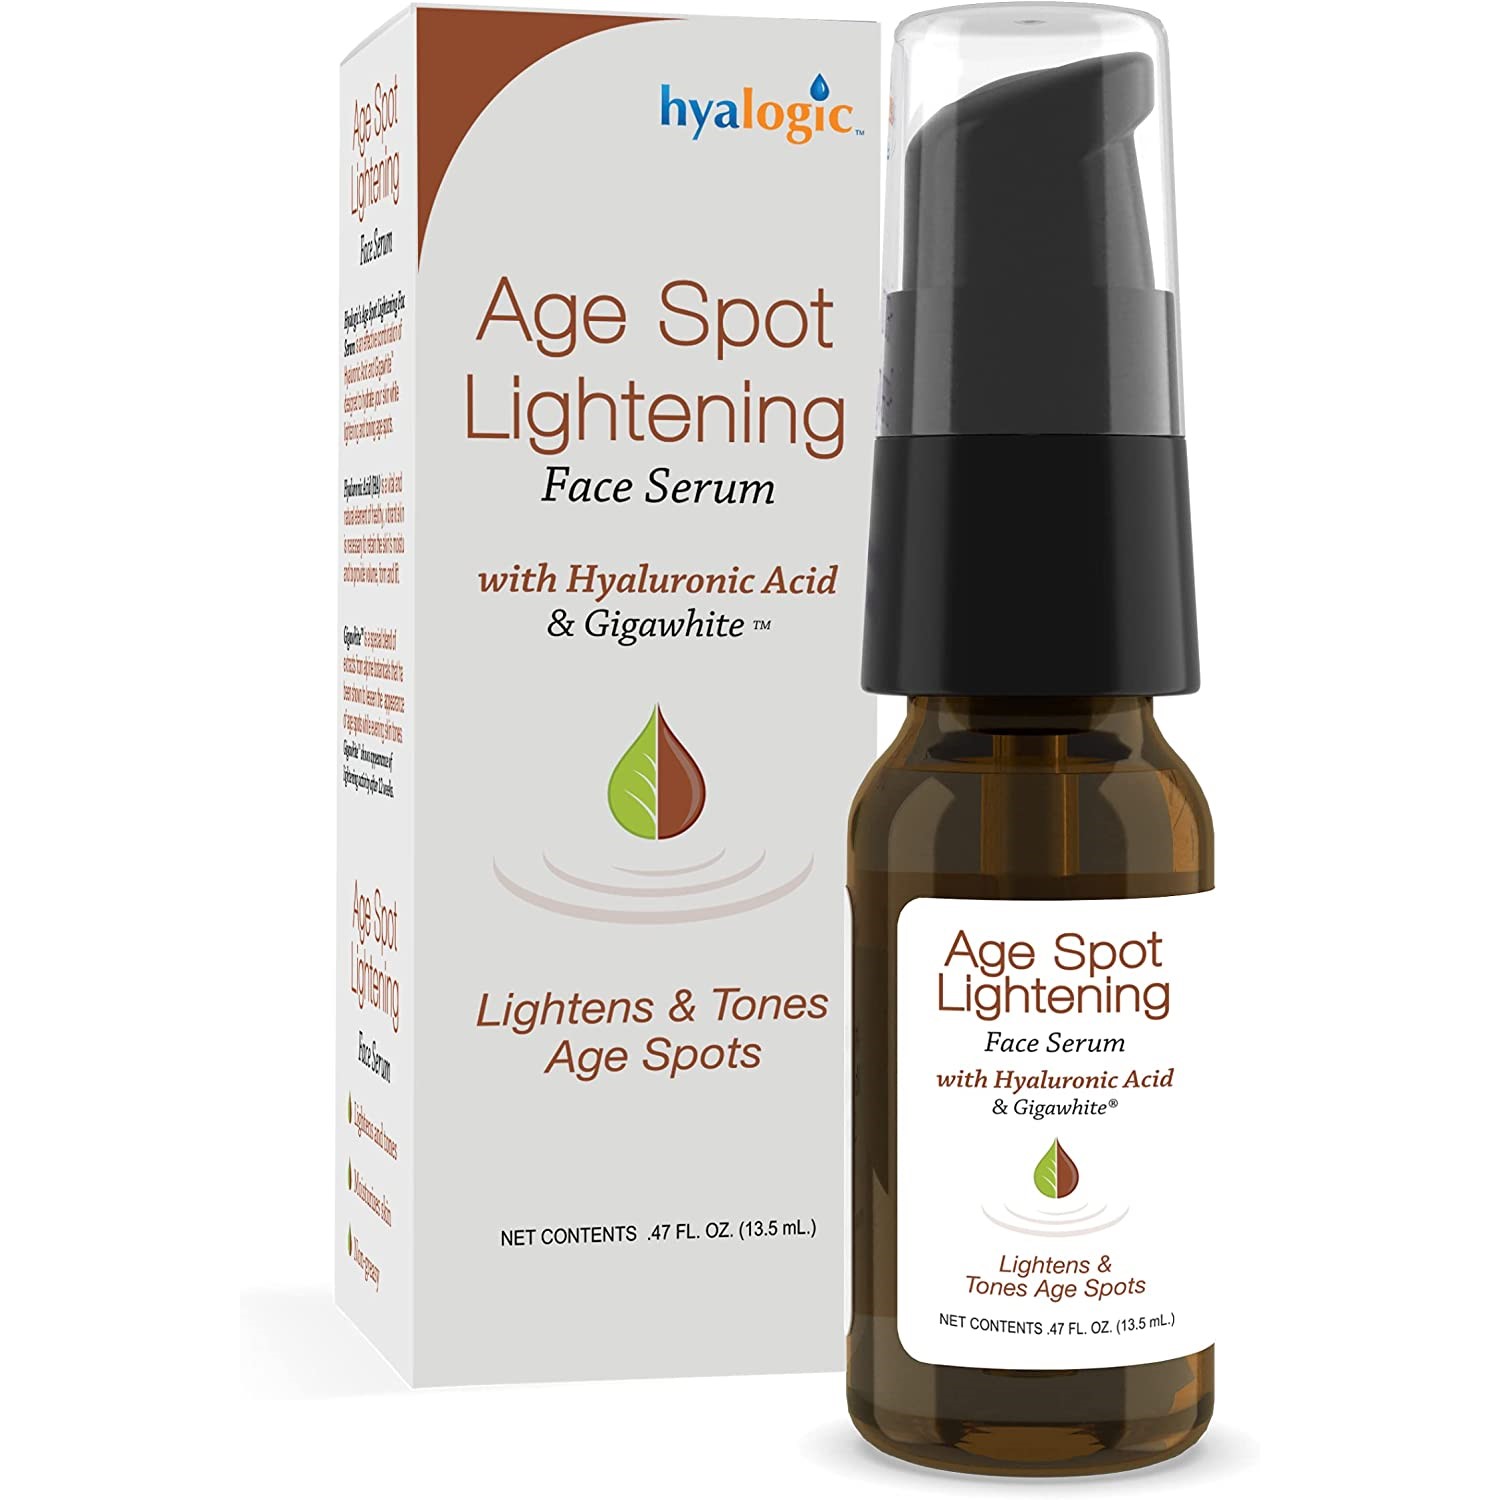 Hyalogic Age Spot Lightening Face Serum With Hyaluronic & Gigawhite (Lightens & Tones Age Spots) | Serum Oils